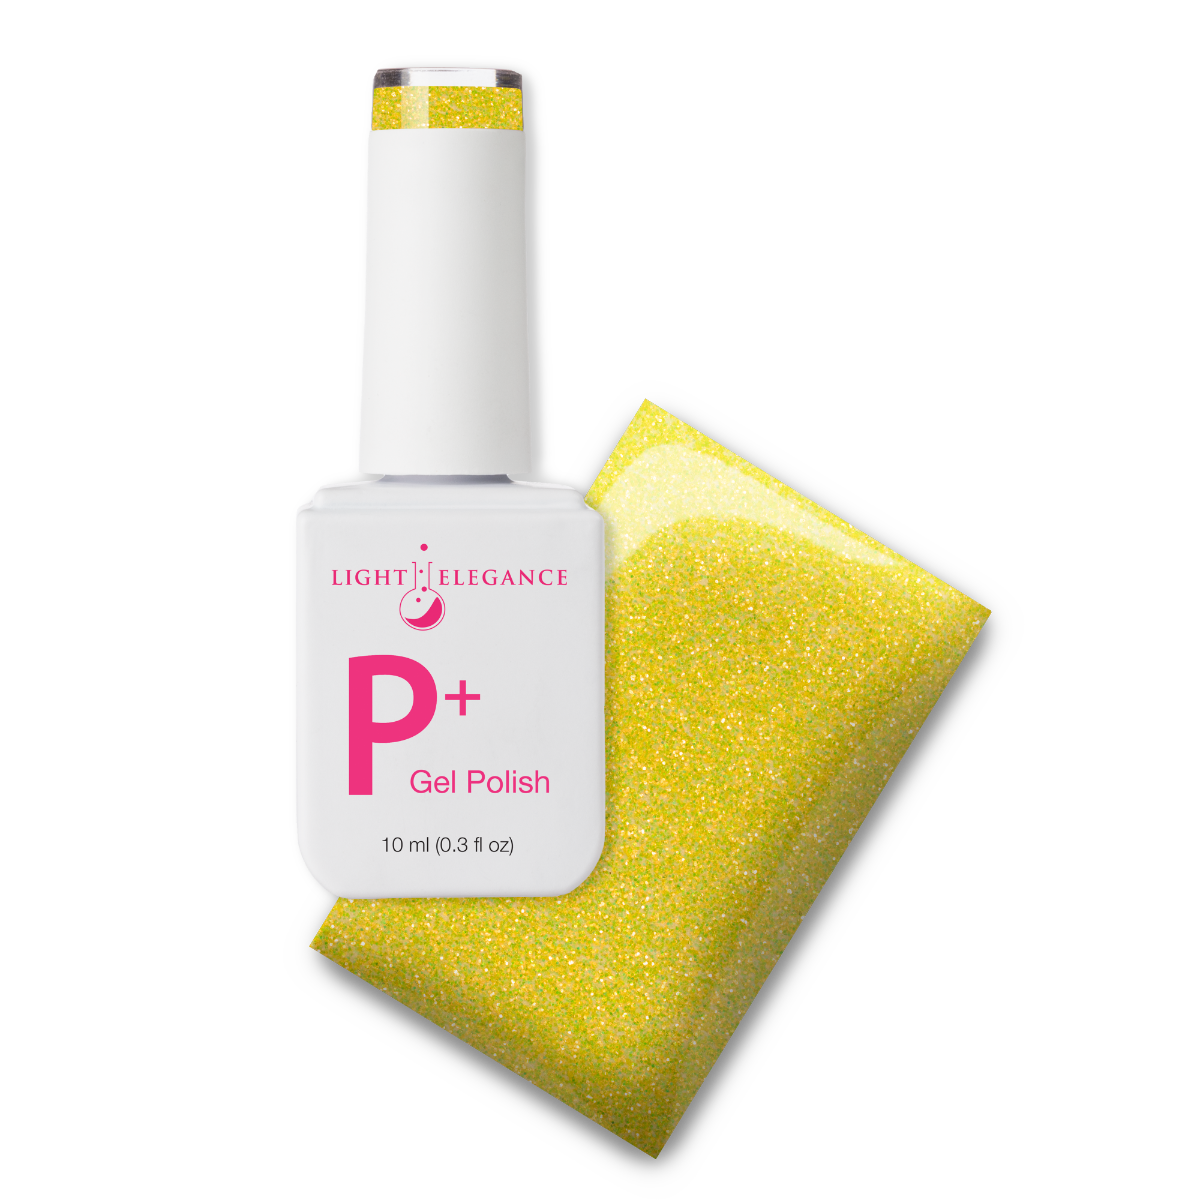 Light Elegance P+ Soak Off Glitter Gel - Good Vibrations :: New Packaging - Creata Beauty - Professional Beauty Products